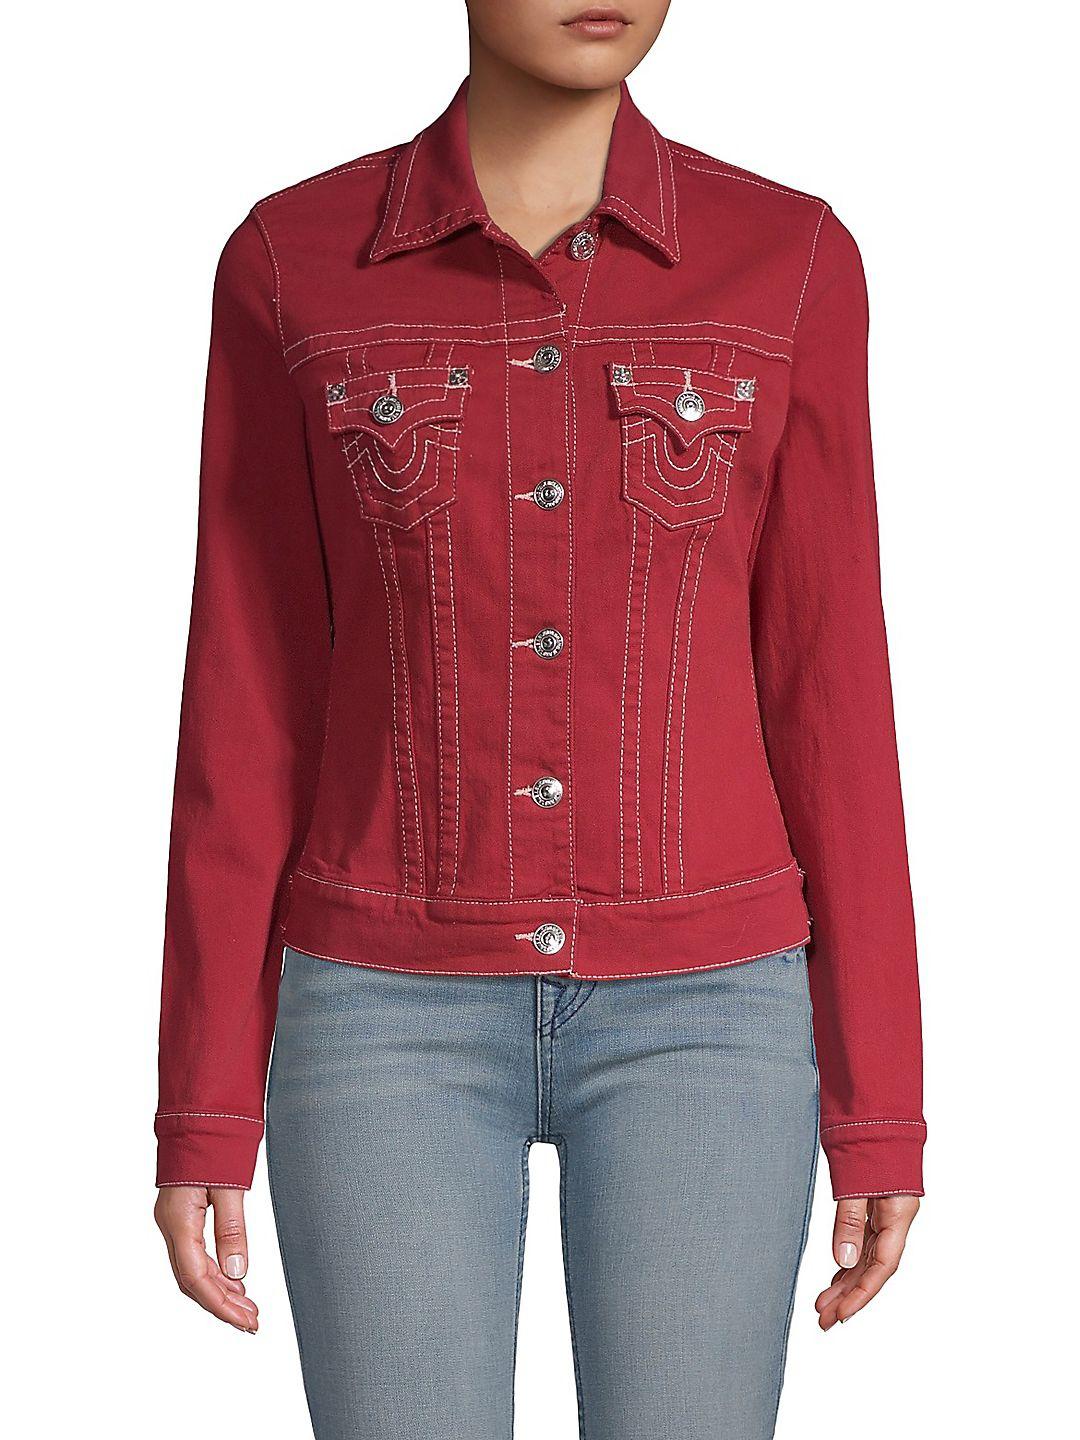 true religion jean jacket red